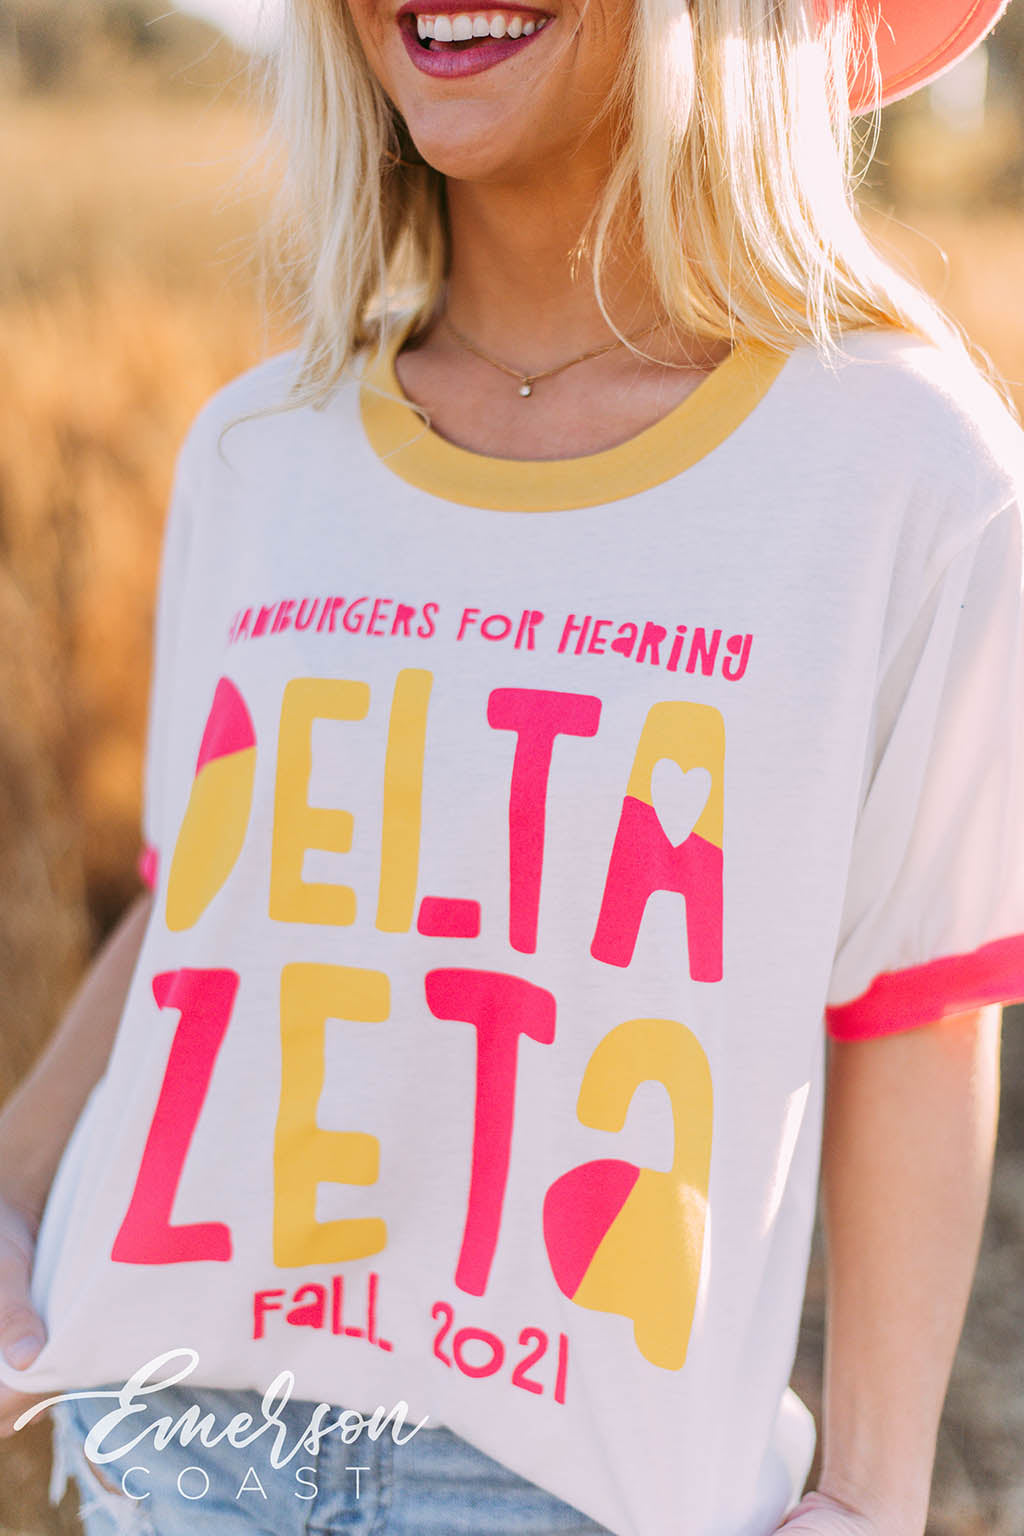 Delta Zeta Hamburgers for Hearing Colorblock Ringer Tee